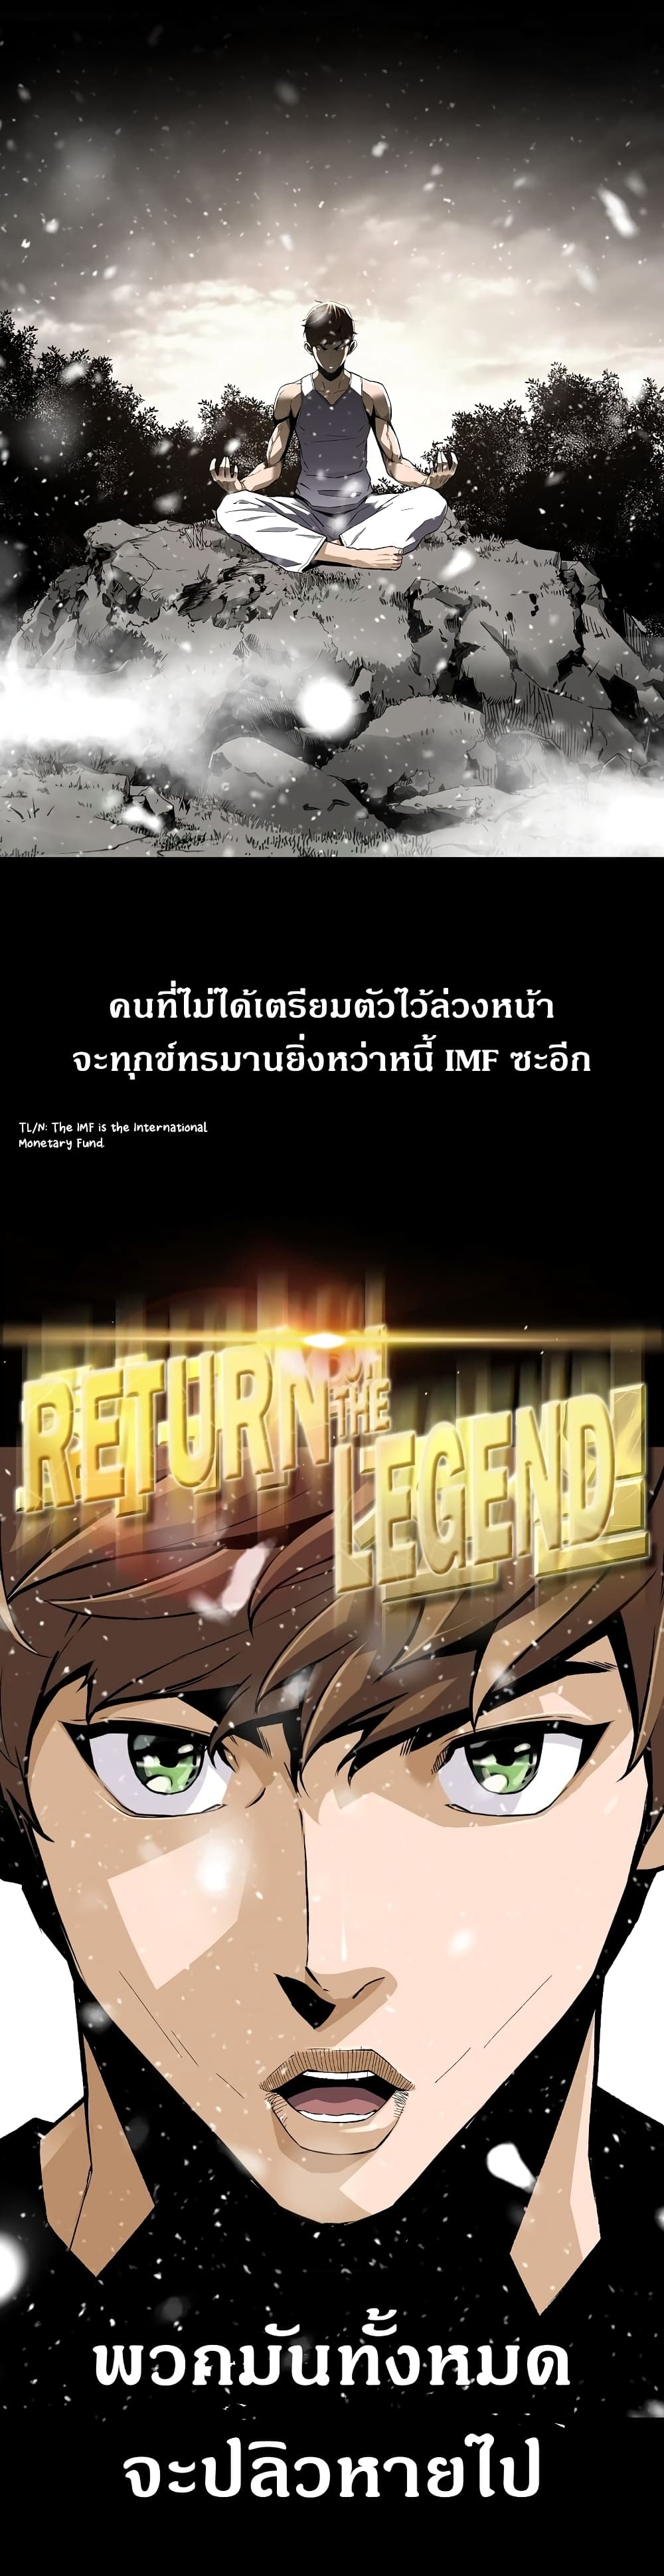 Return of the Legend ตอนที่ 45 (3)